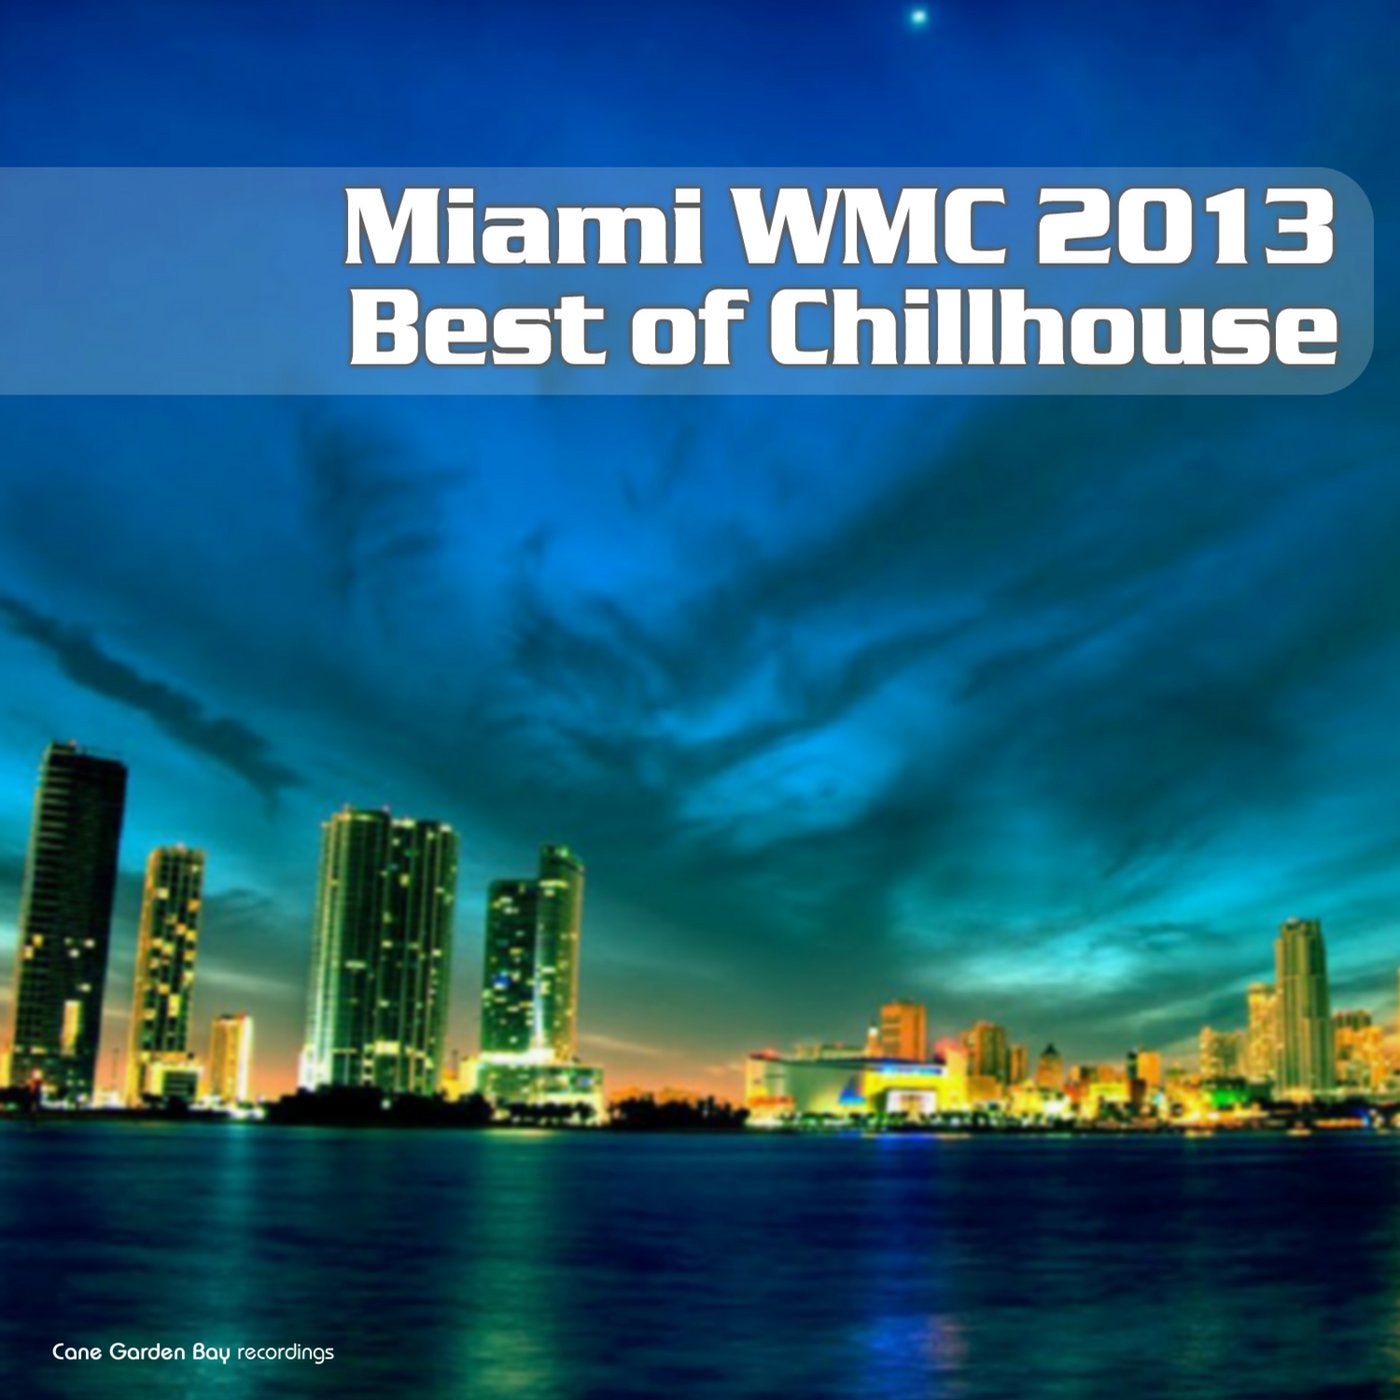 Miami Wmc 2013 Best of Chillhouse